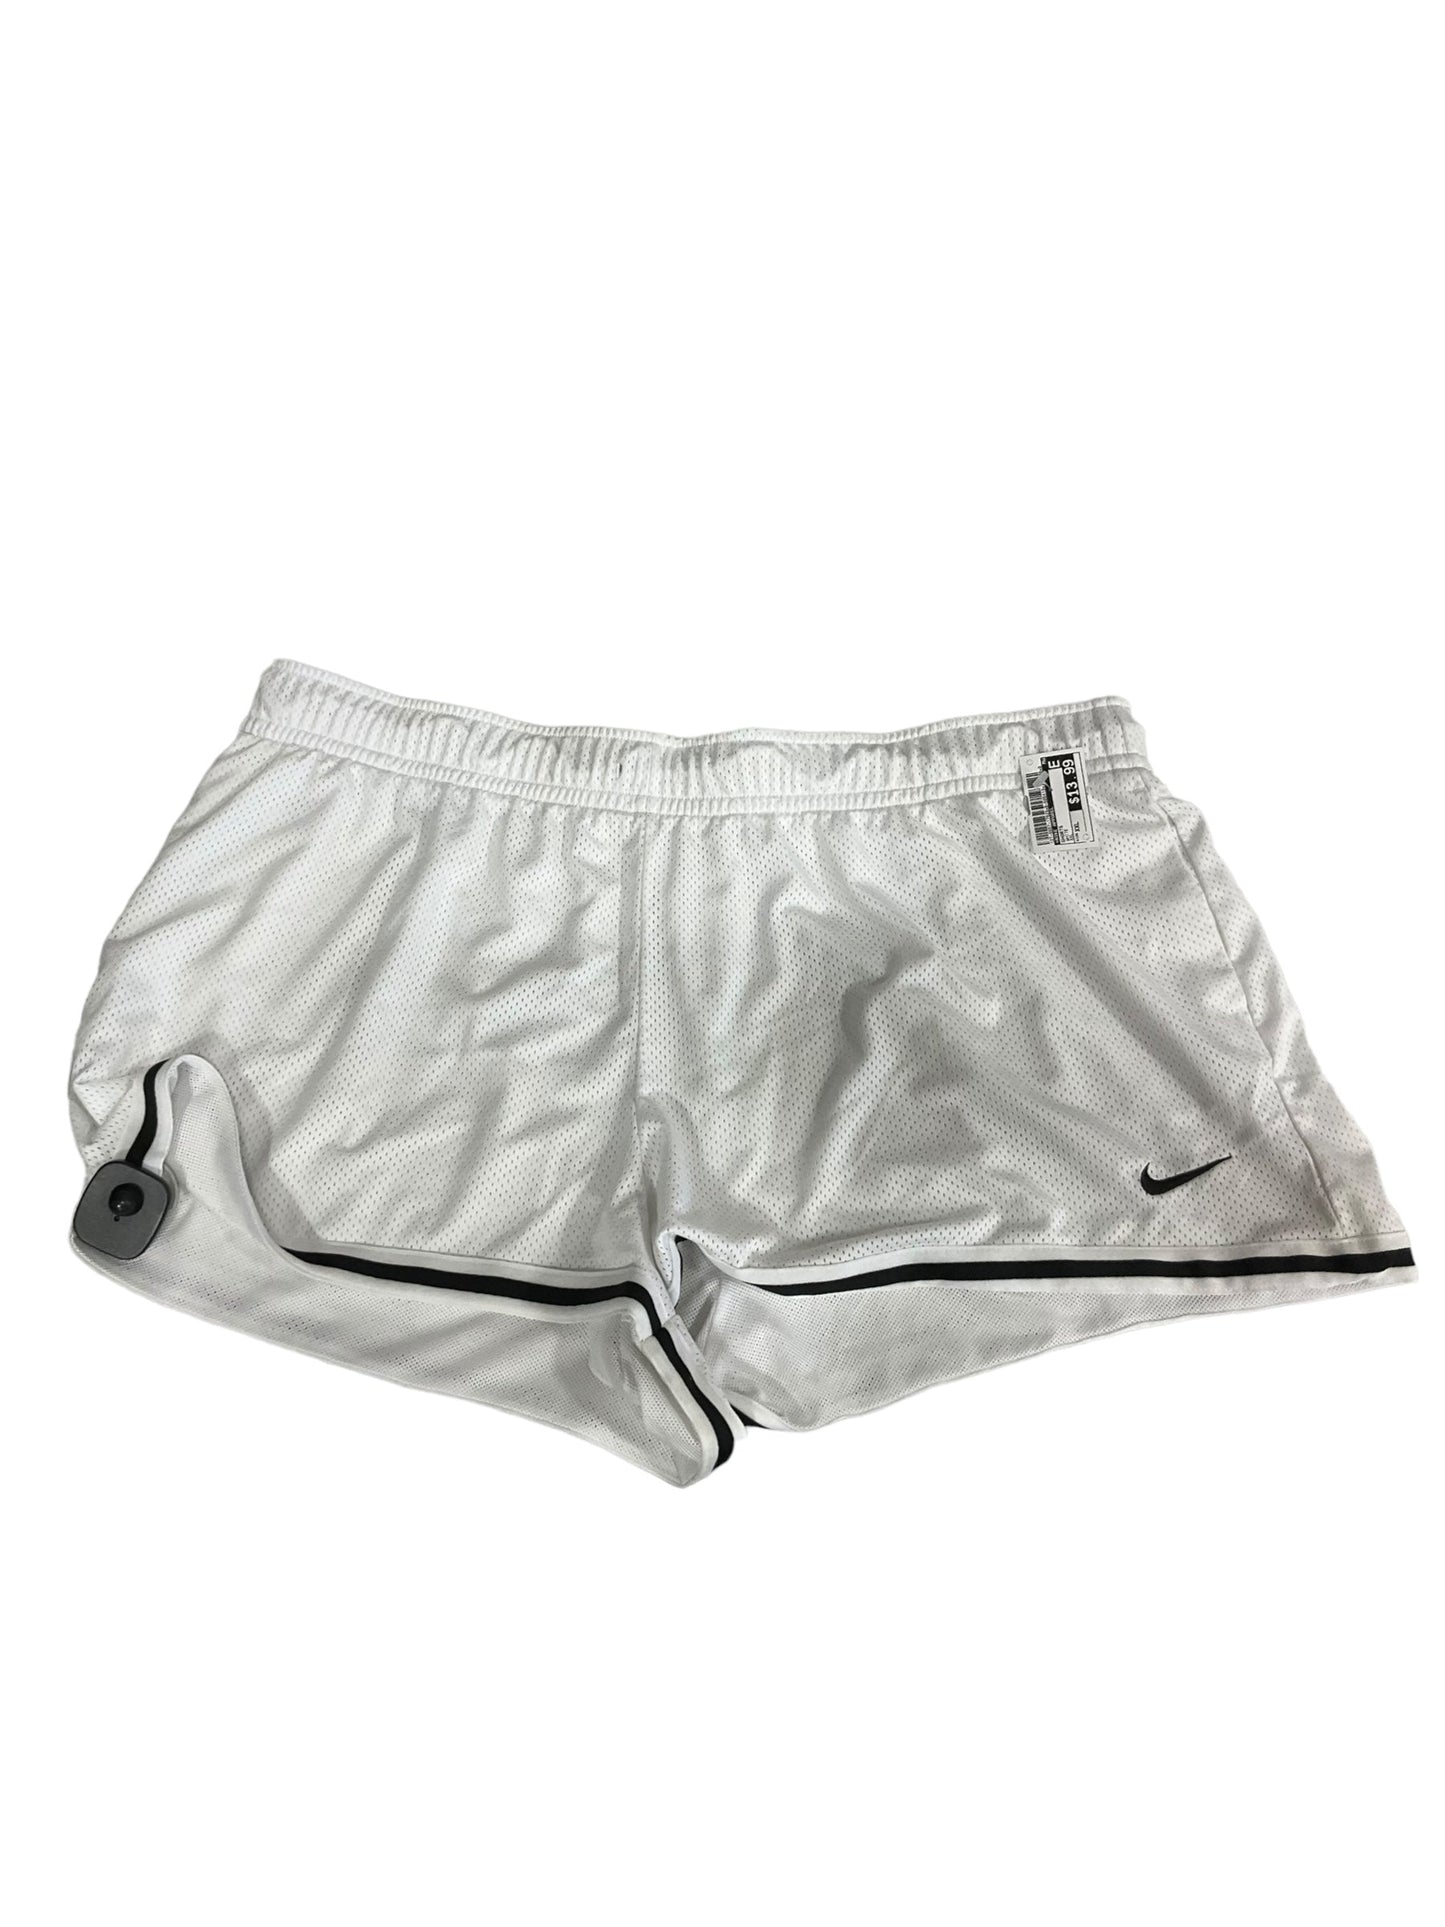 Shorts By Nike Apparel  Size: Xxl